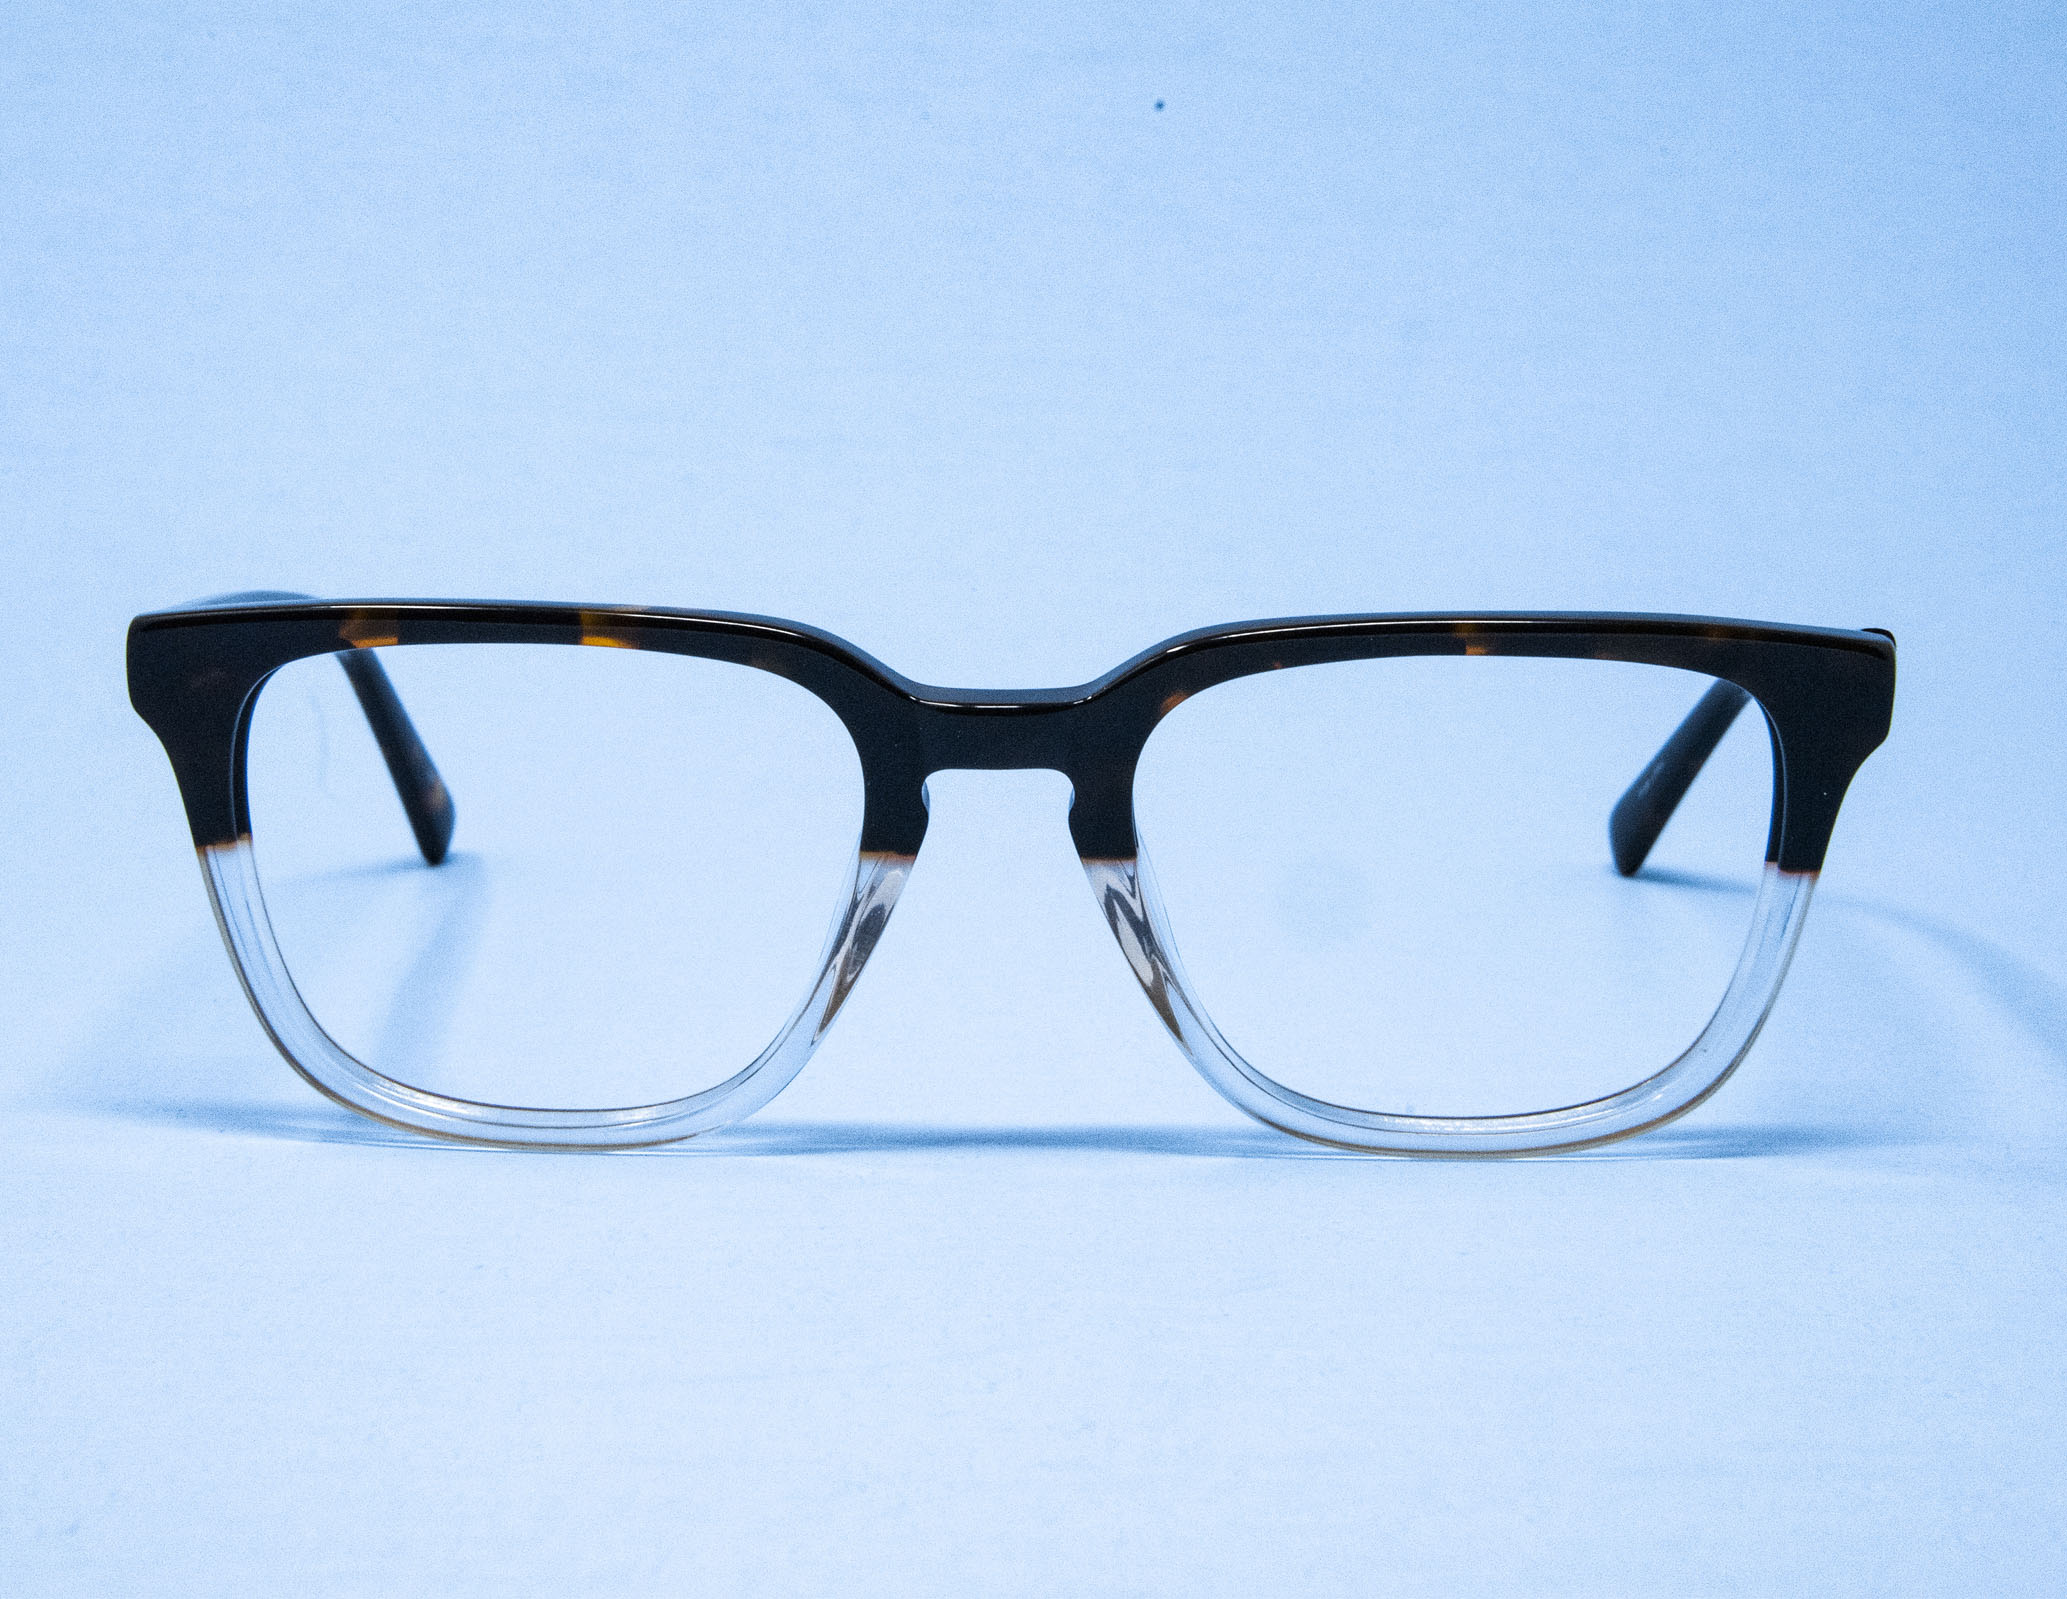 Two-toned eyeglasses